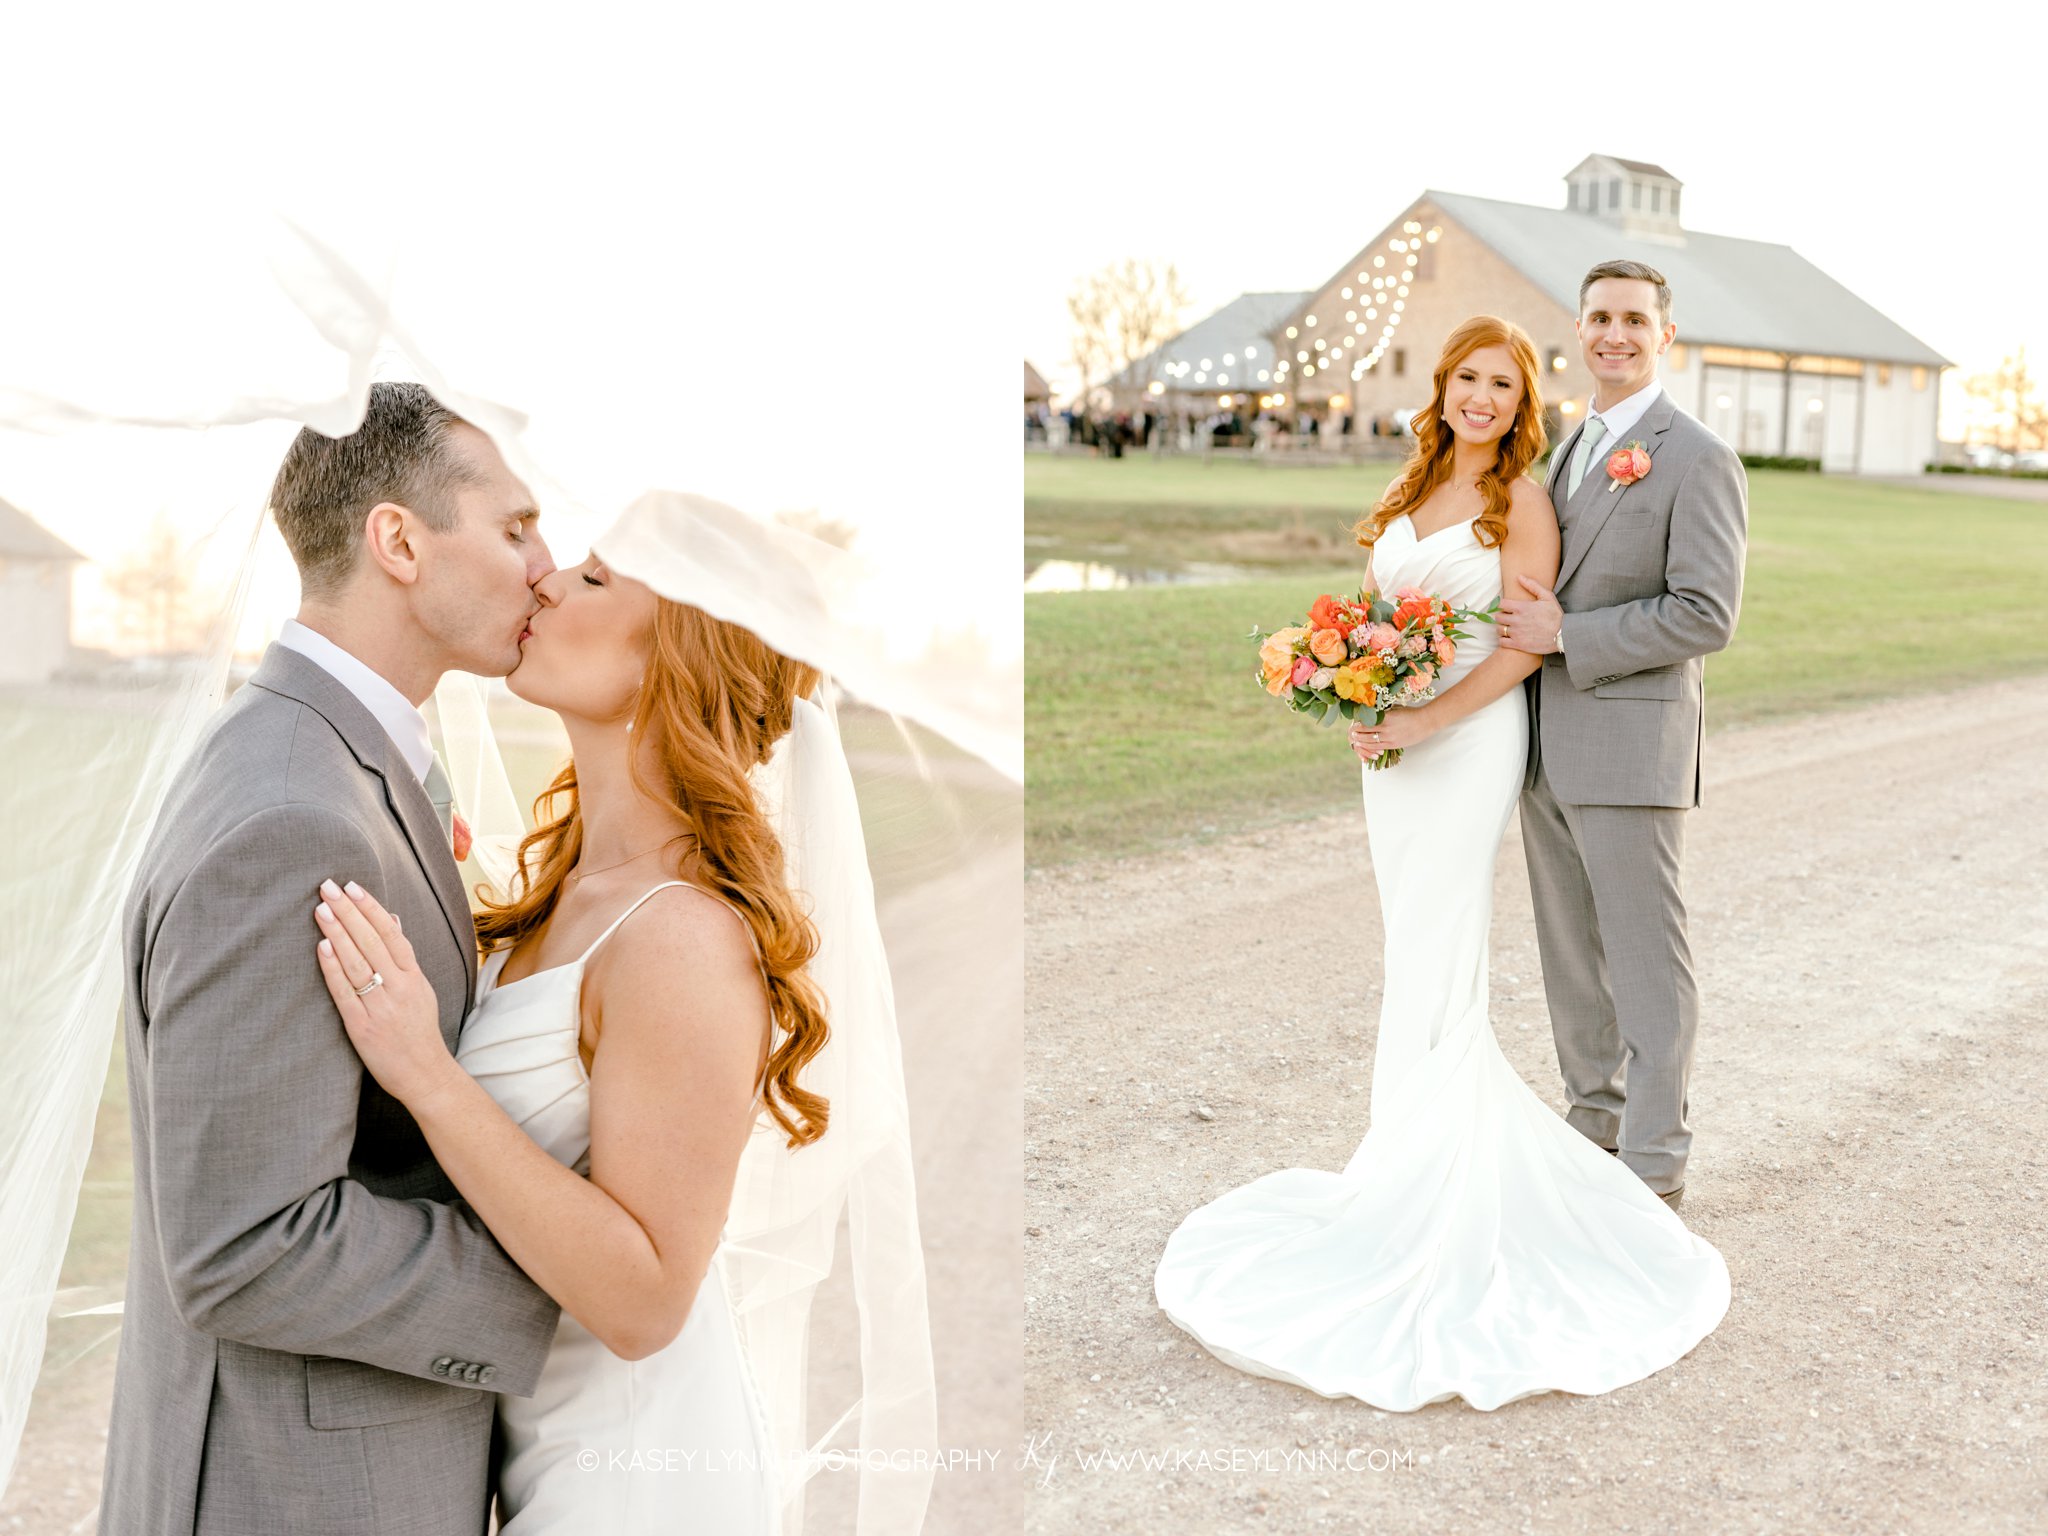 Beckendorff Farms Wedding Photographer / Kasey Lynn Photography